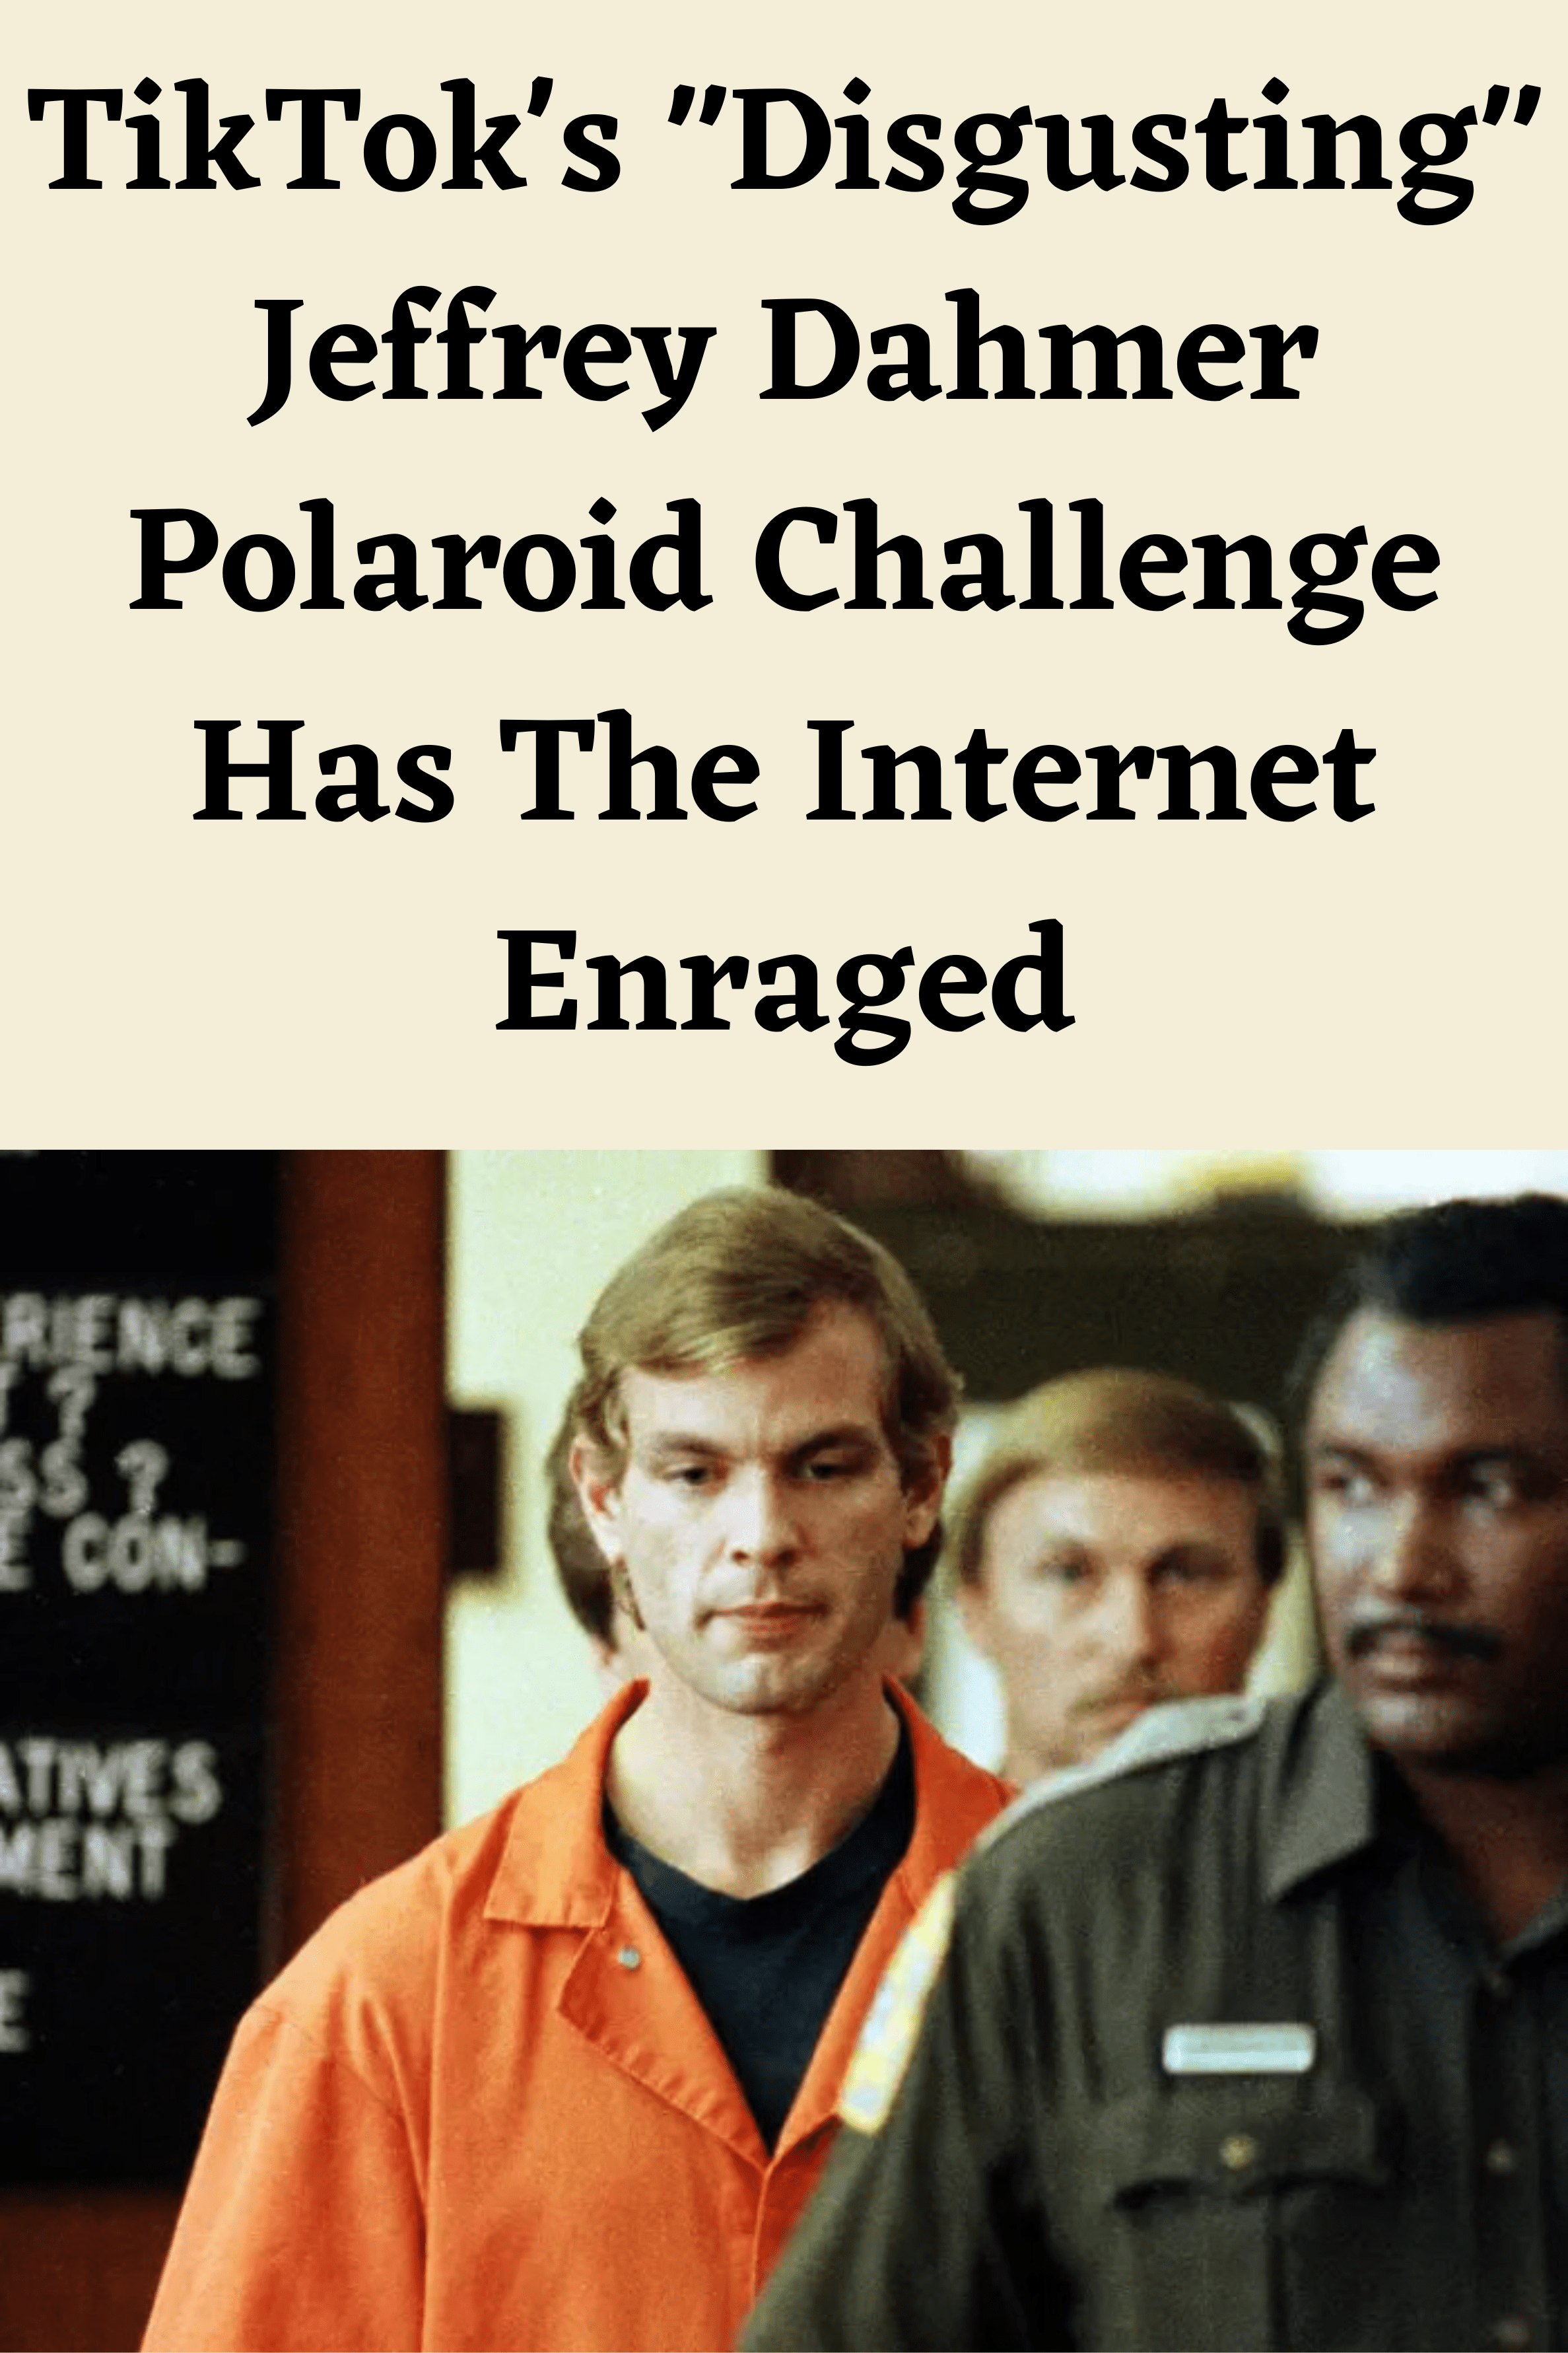 TikTok's "Disgusting" Jeffrey Dahmer Polaroid Challenge Has The Internet Enraged